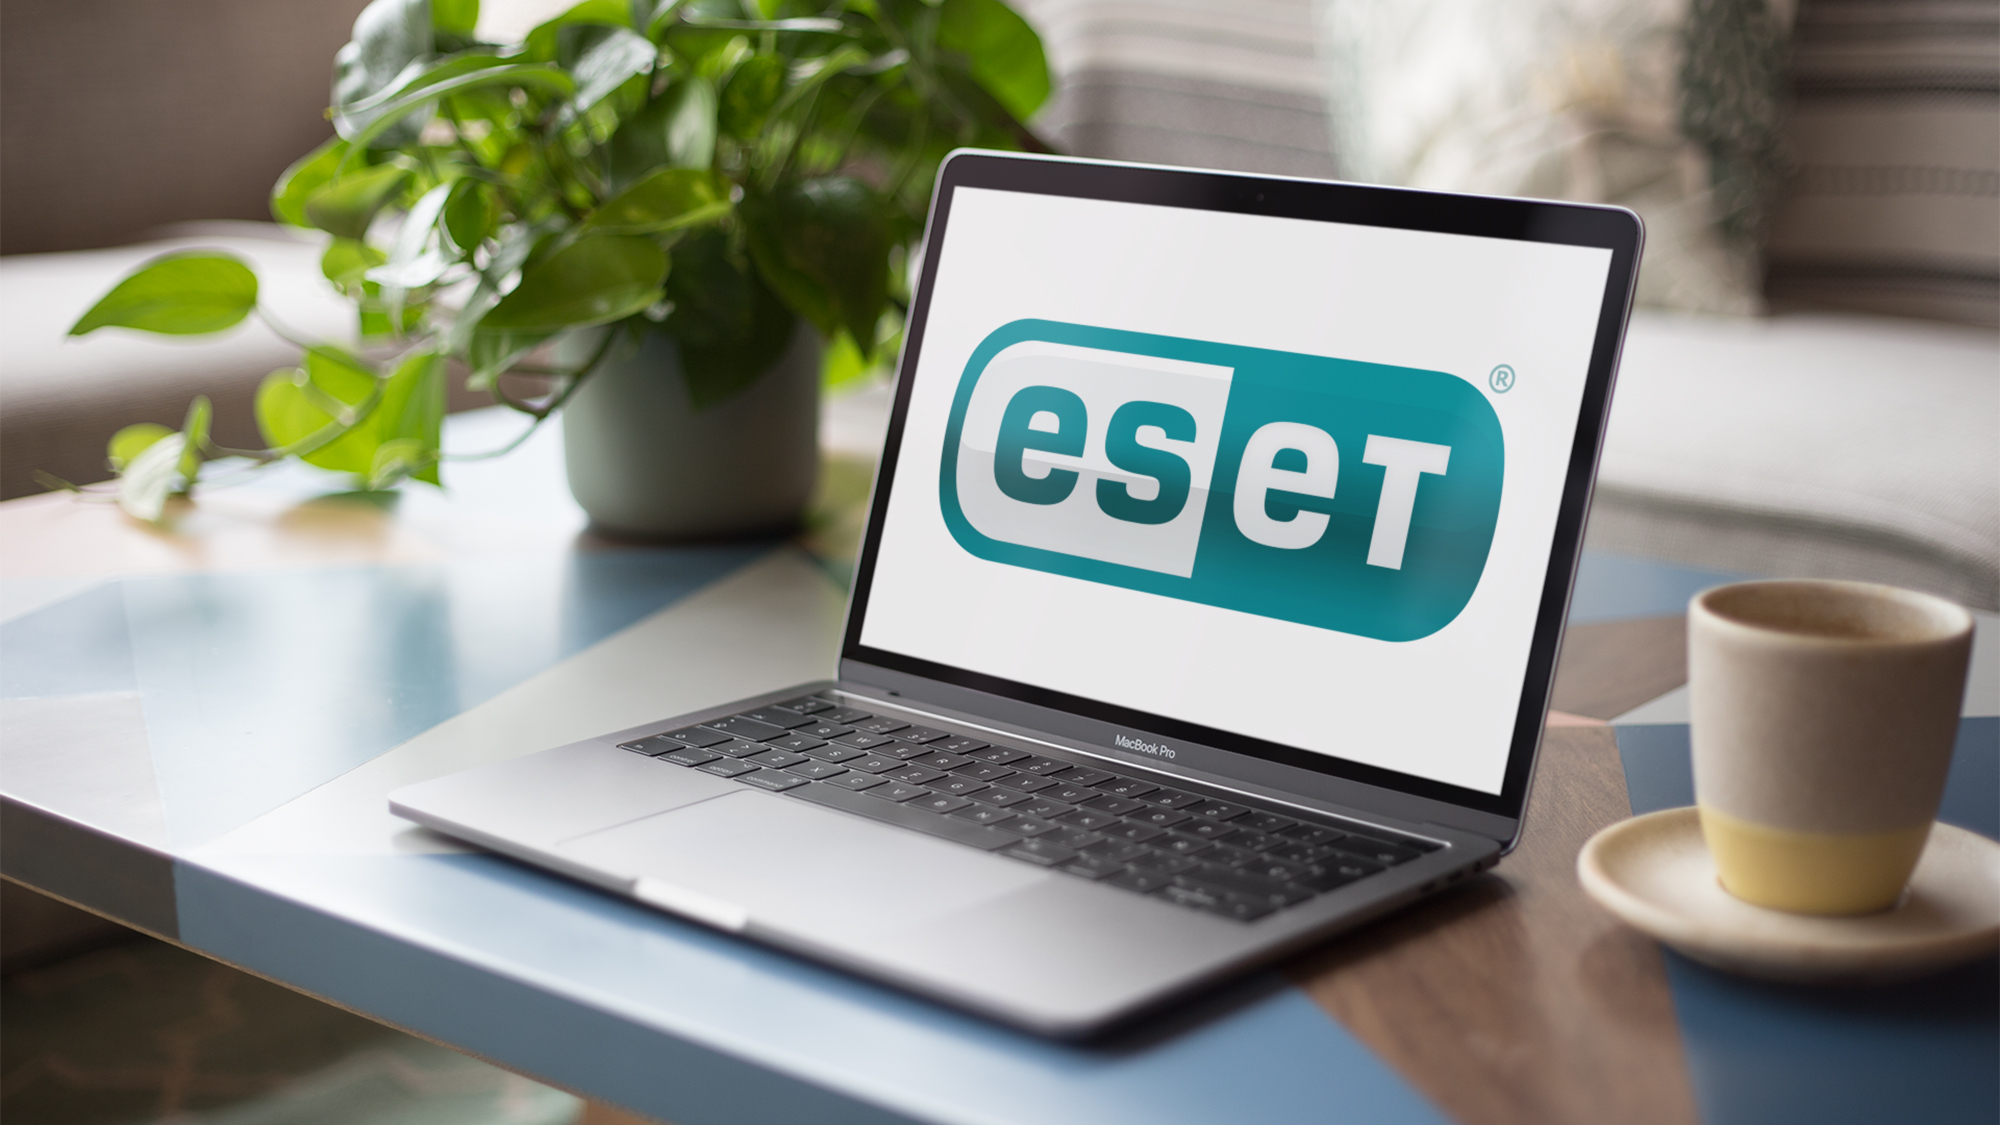 ESET Smart Security Premium internet security suite on a laptop